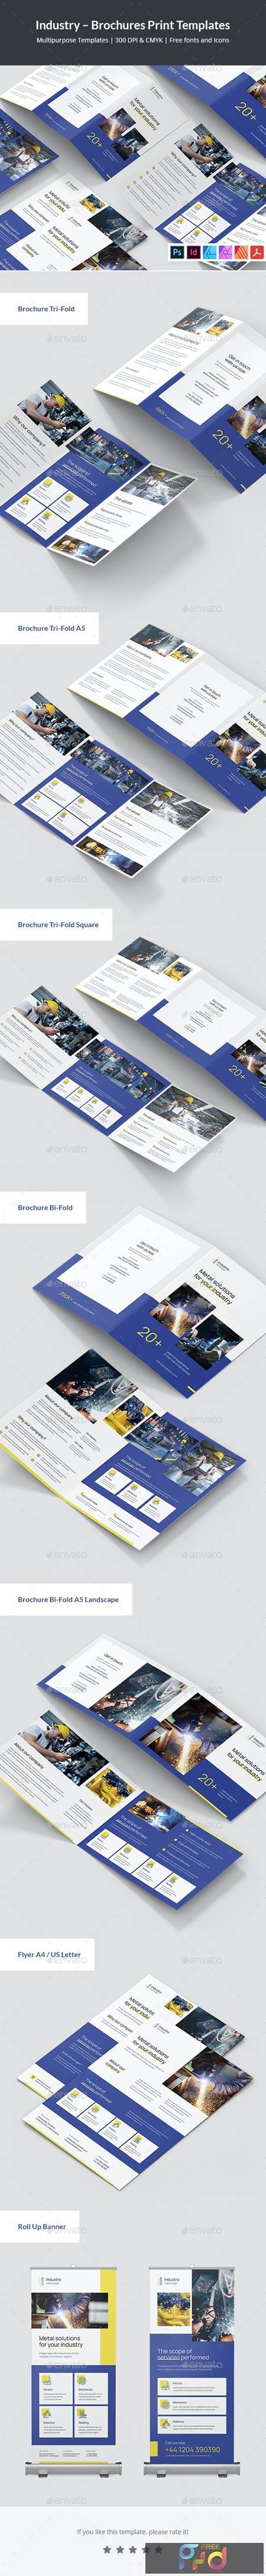 Industry – Brochures Package Print Templates 35423514 1